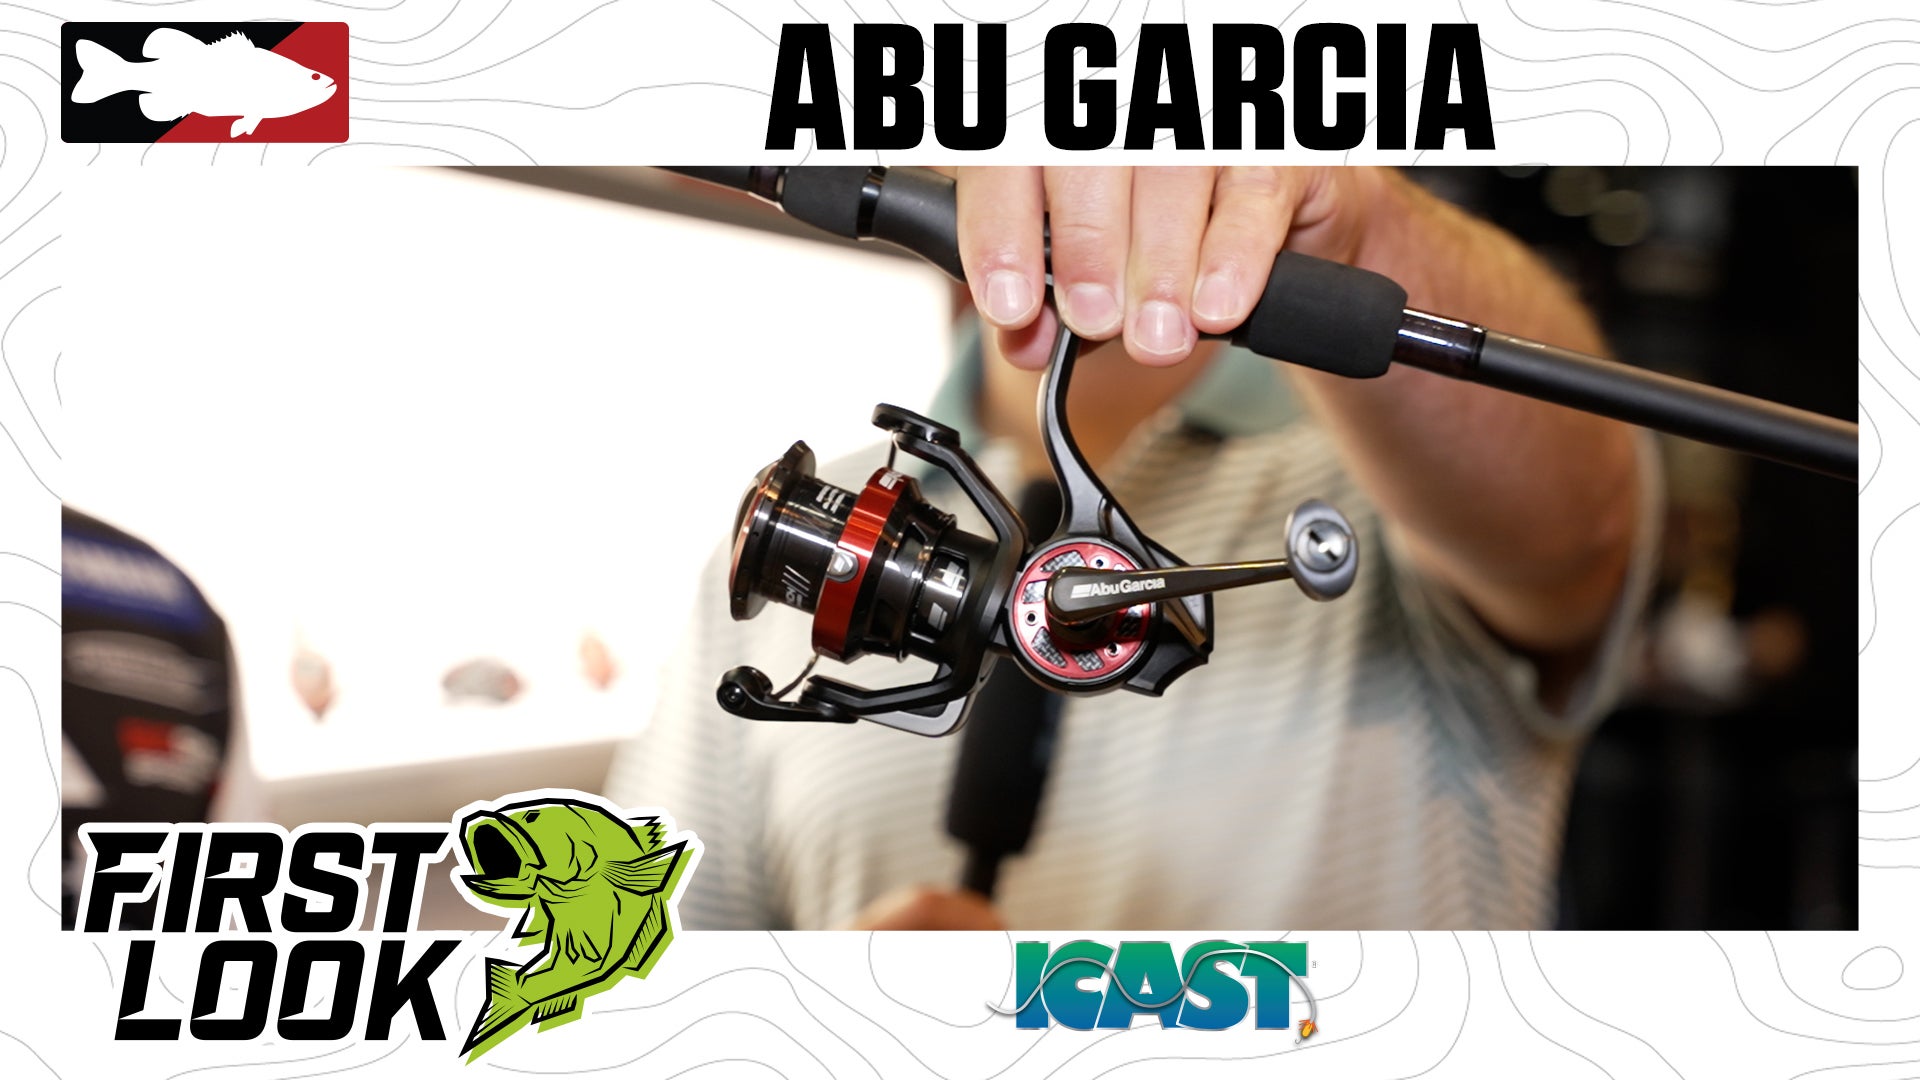 ICAST 2022 Videos - Abu Garcia Revo Winch SP Spinning Reels with